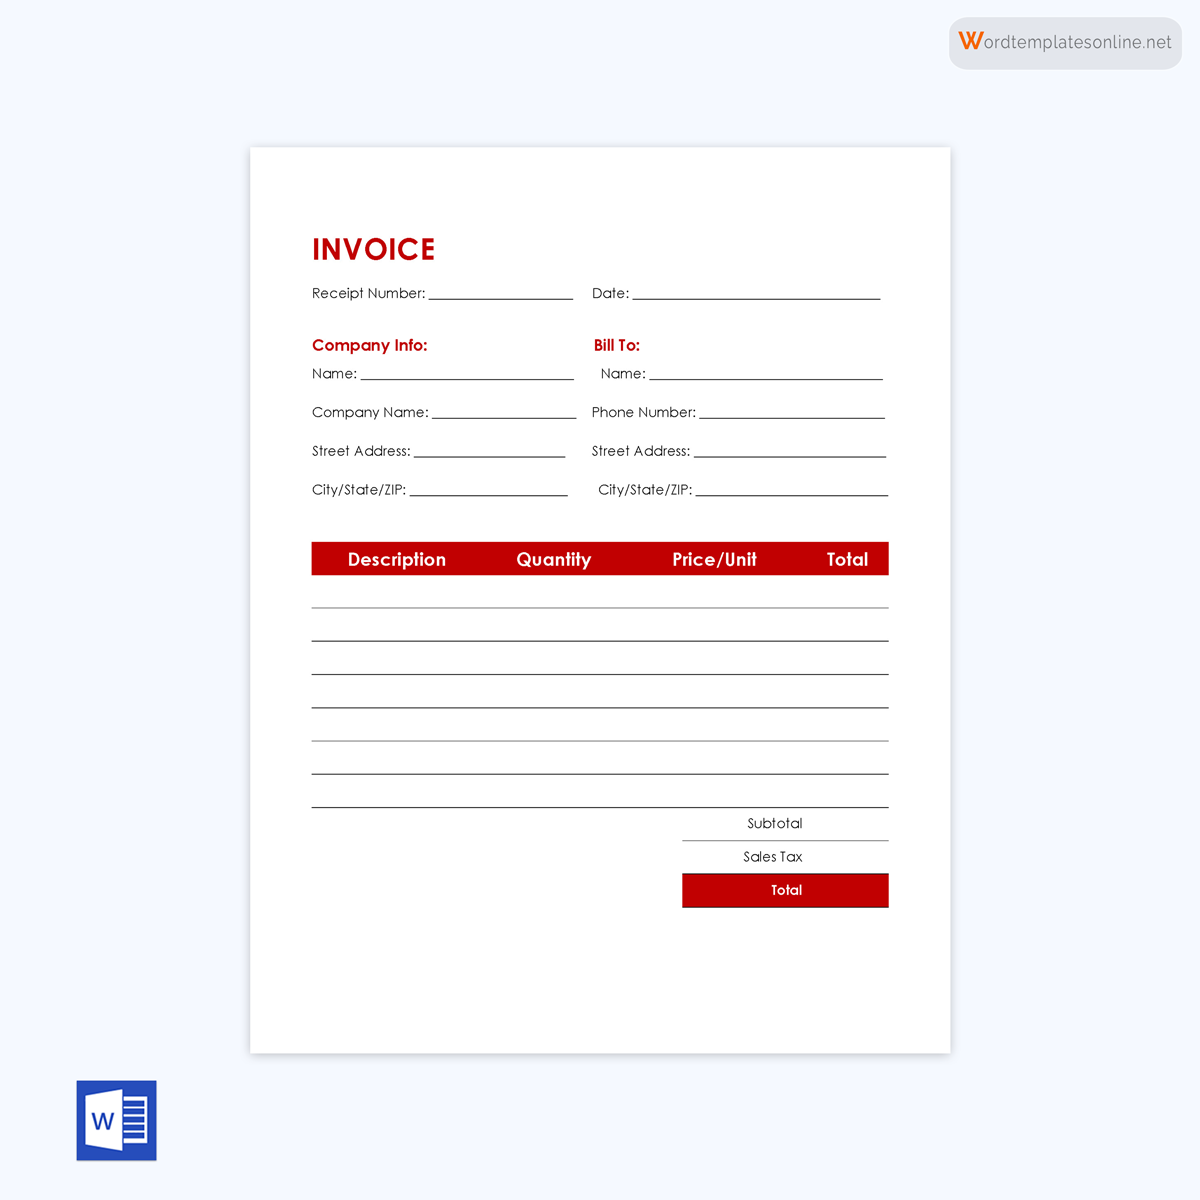 Printable invoice template